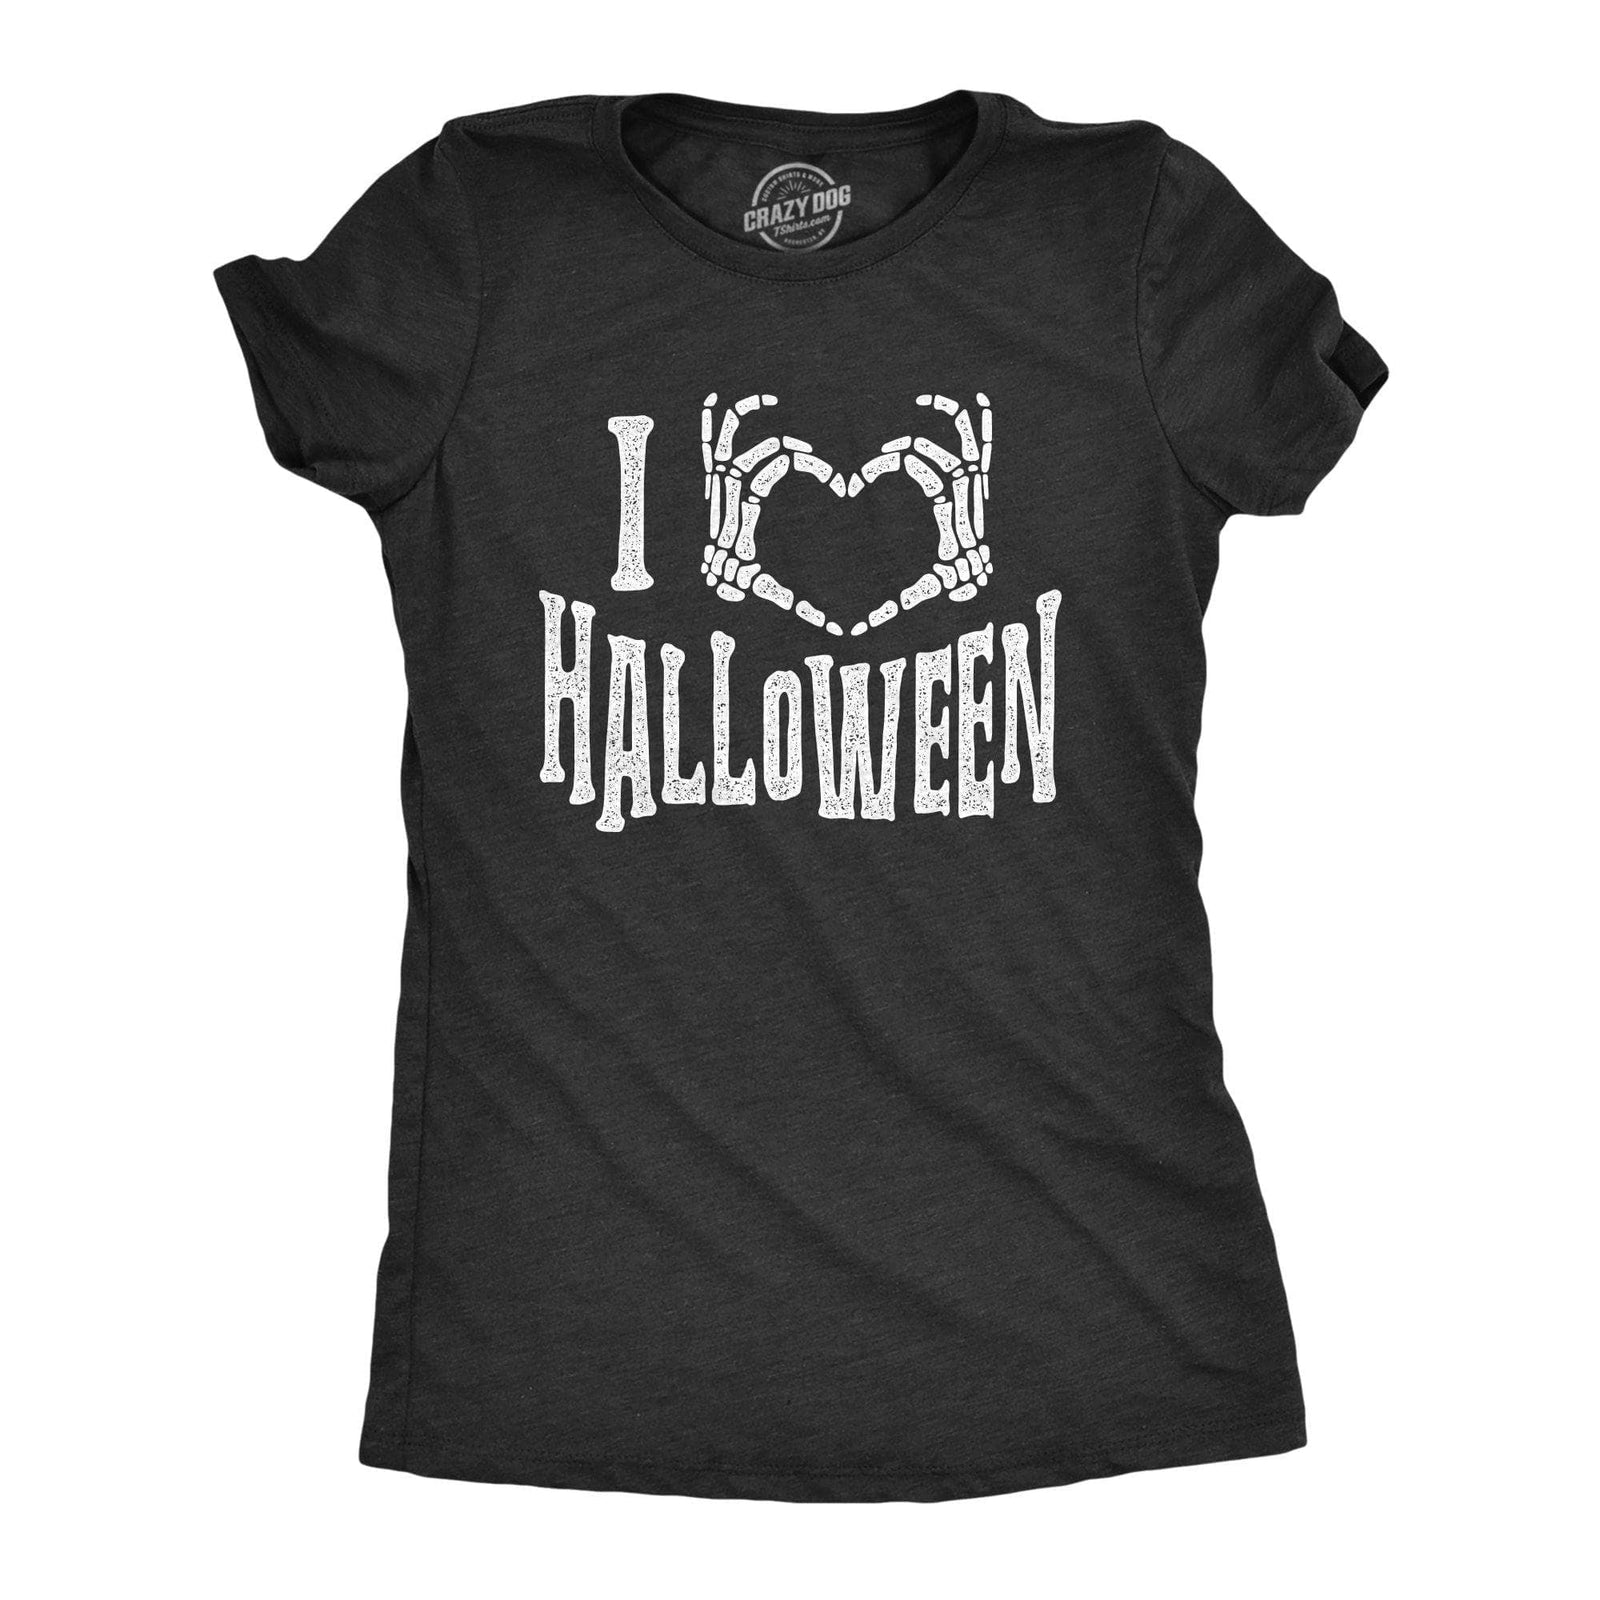 Womens Peace Love Brains Tshirt Funny Halloween Skeleton Zombie Graphic Tee  Womens Graphic Tees 